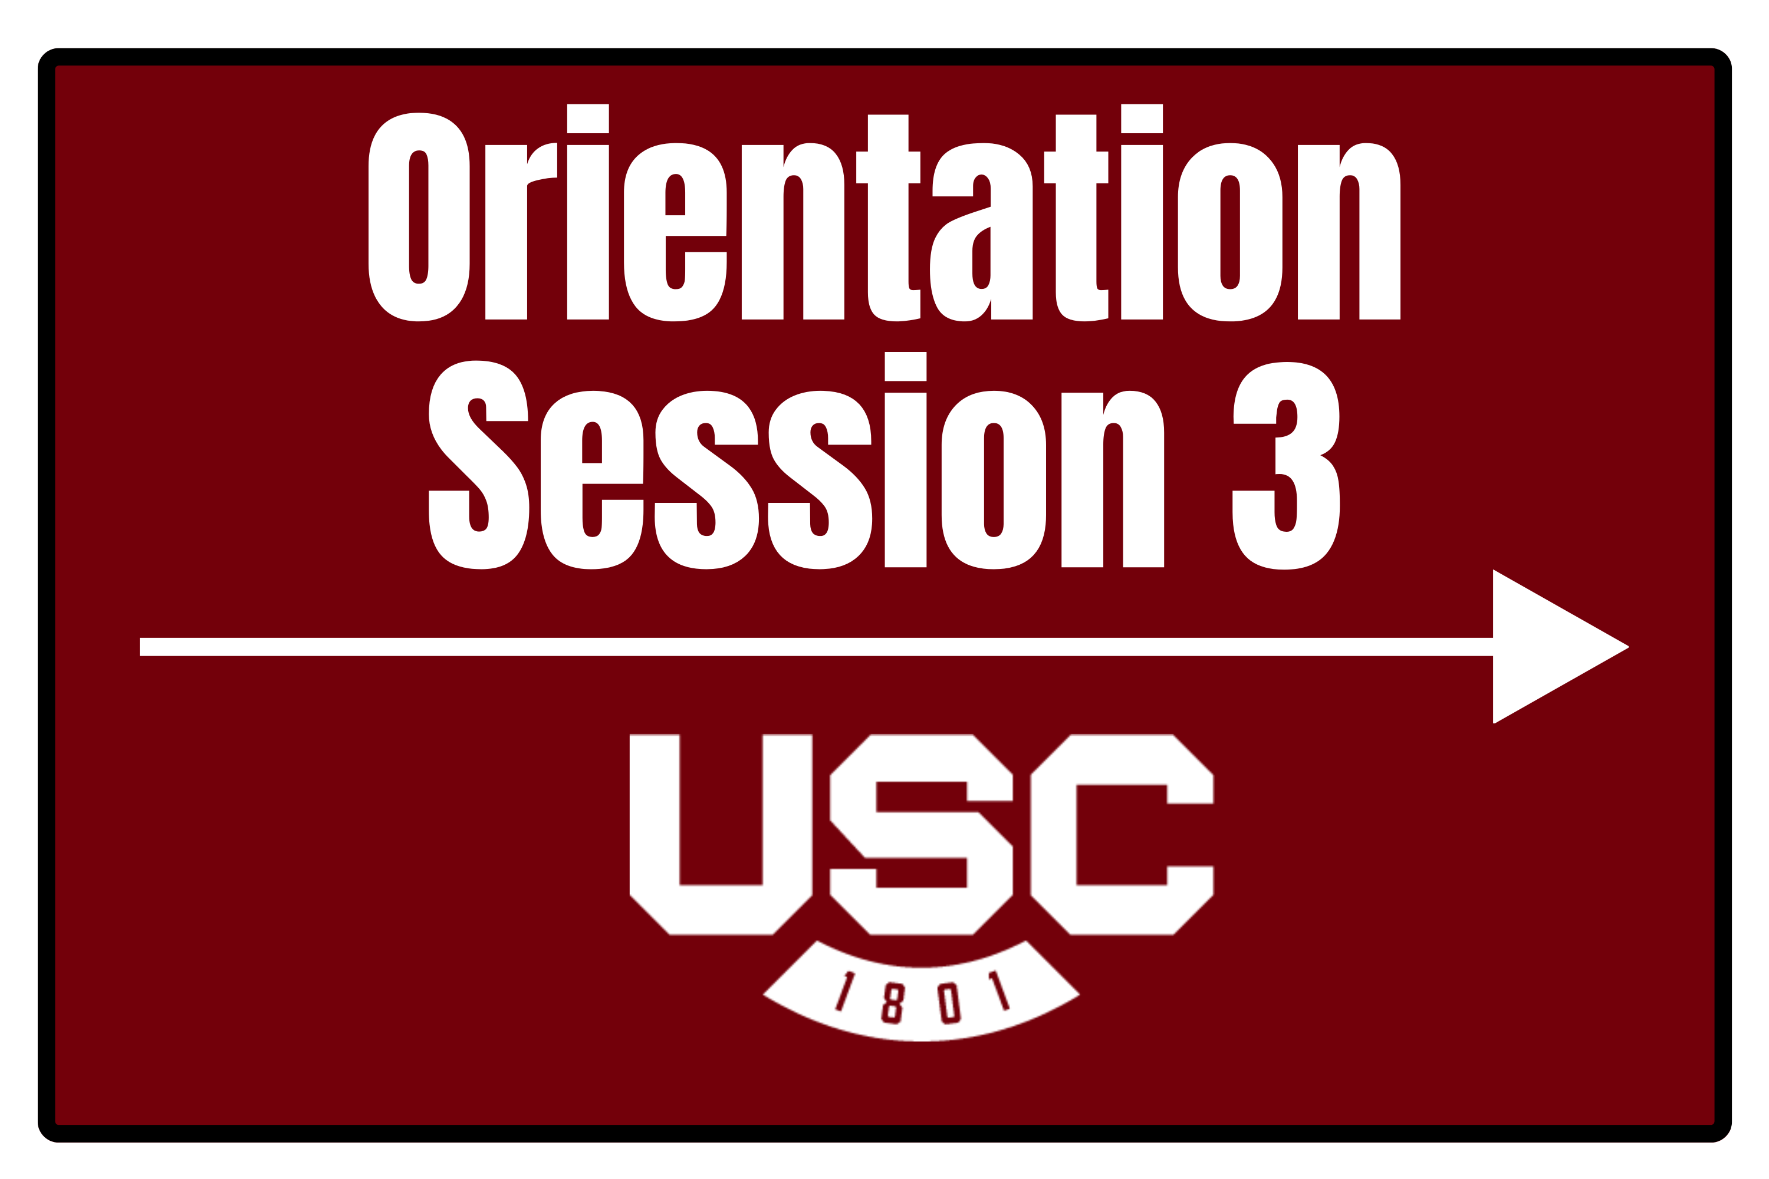 Orientation Session 3: June 3 - 4